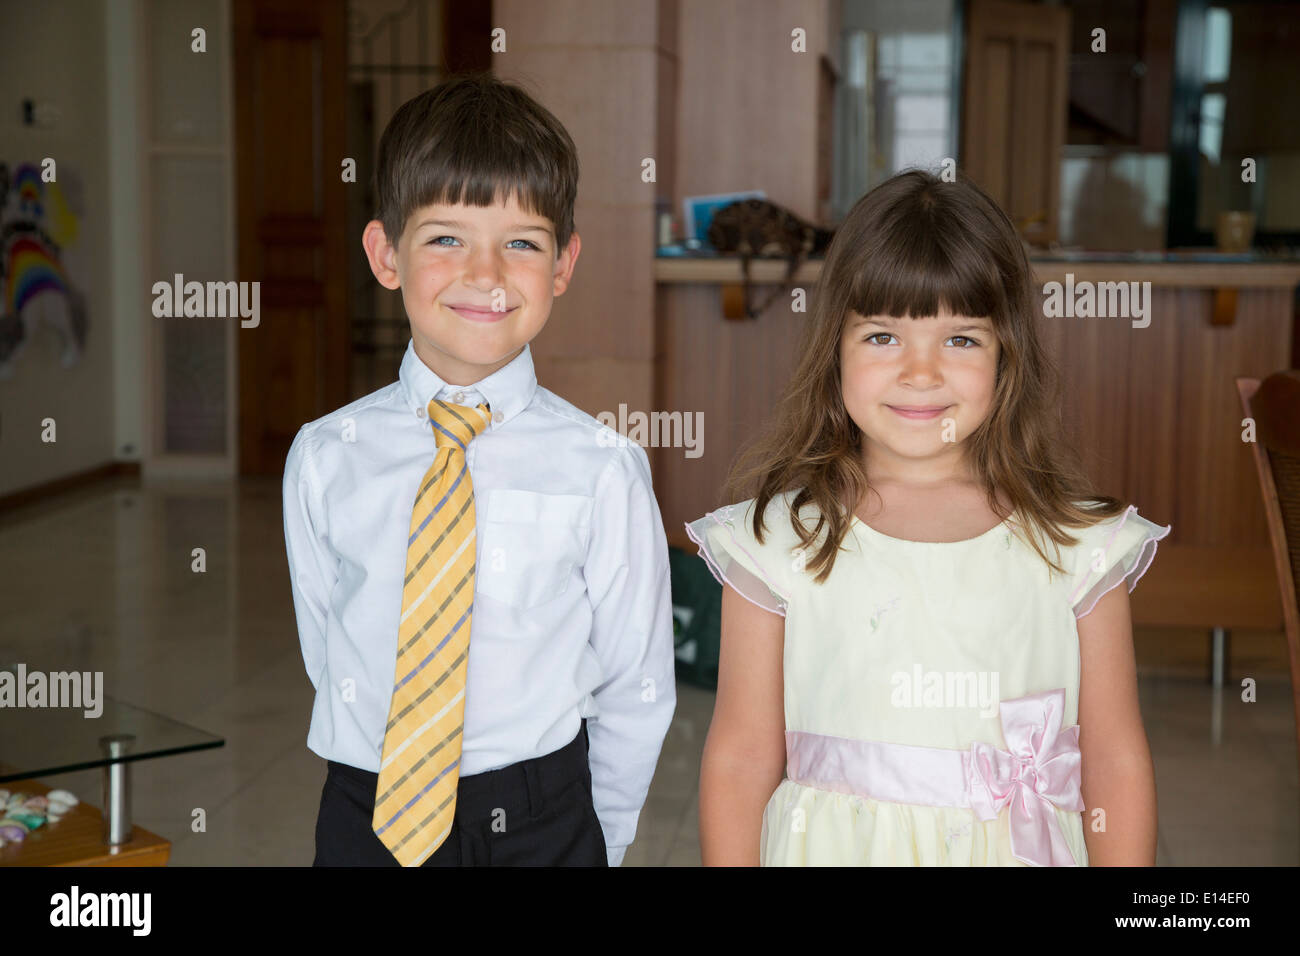 Caucasian children smiling in formal wear Stock Photo